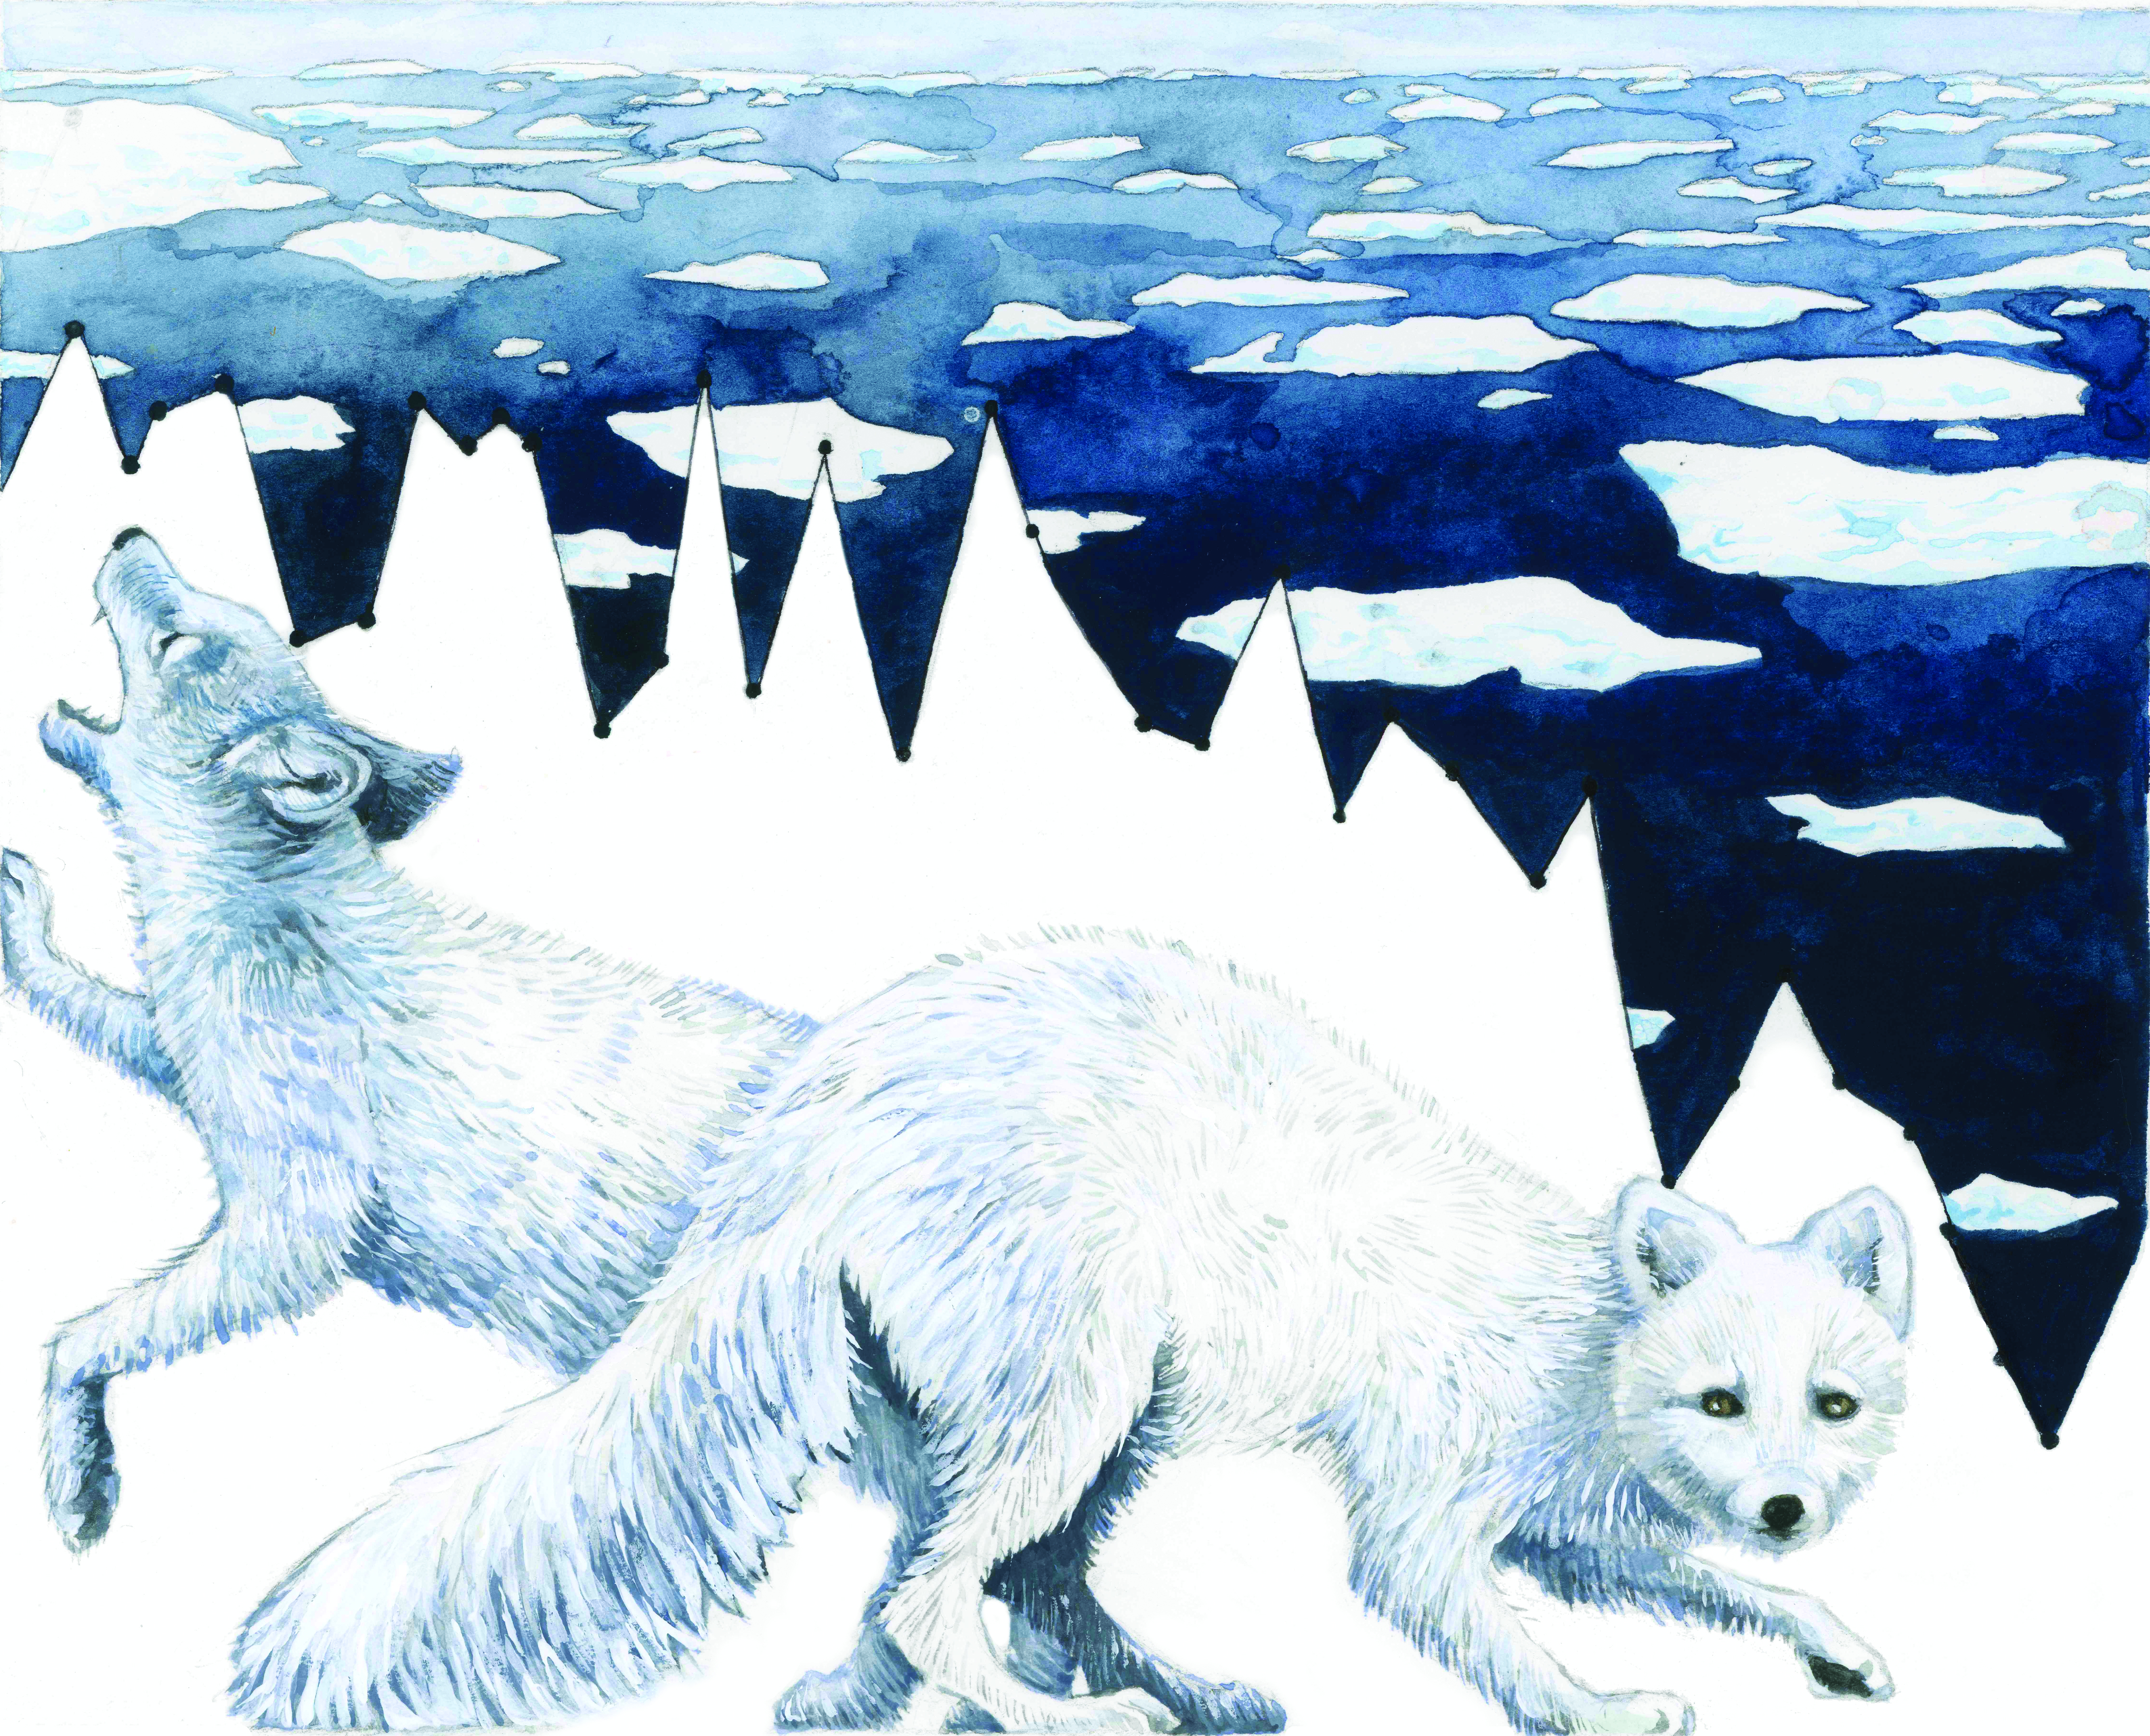 Habitat Degradation_ Arctic Sea Ice Melt